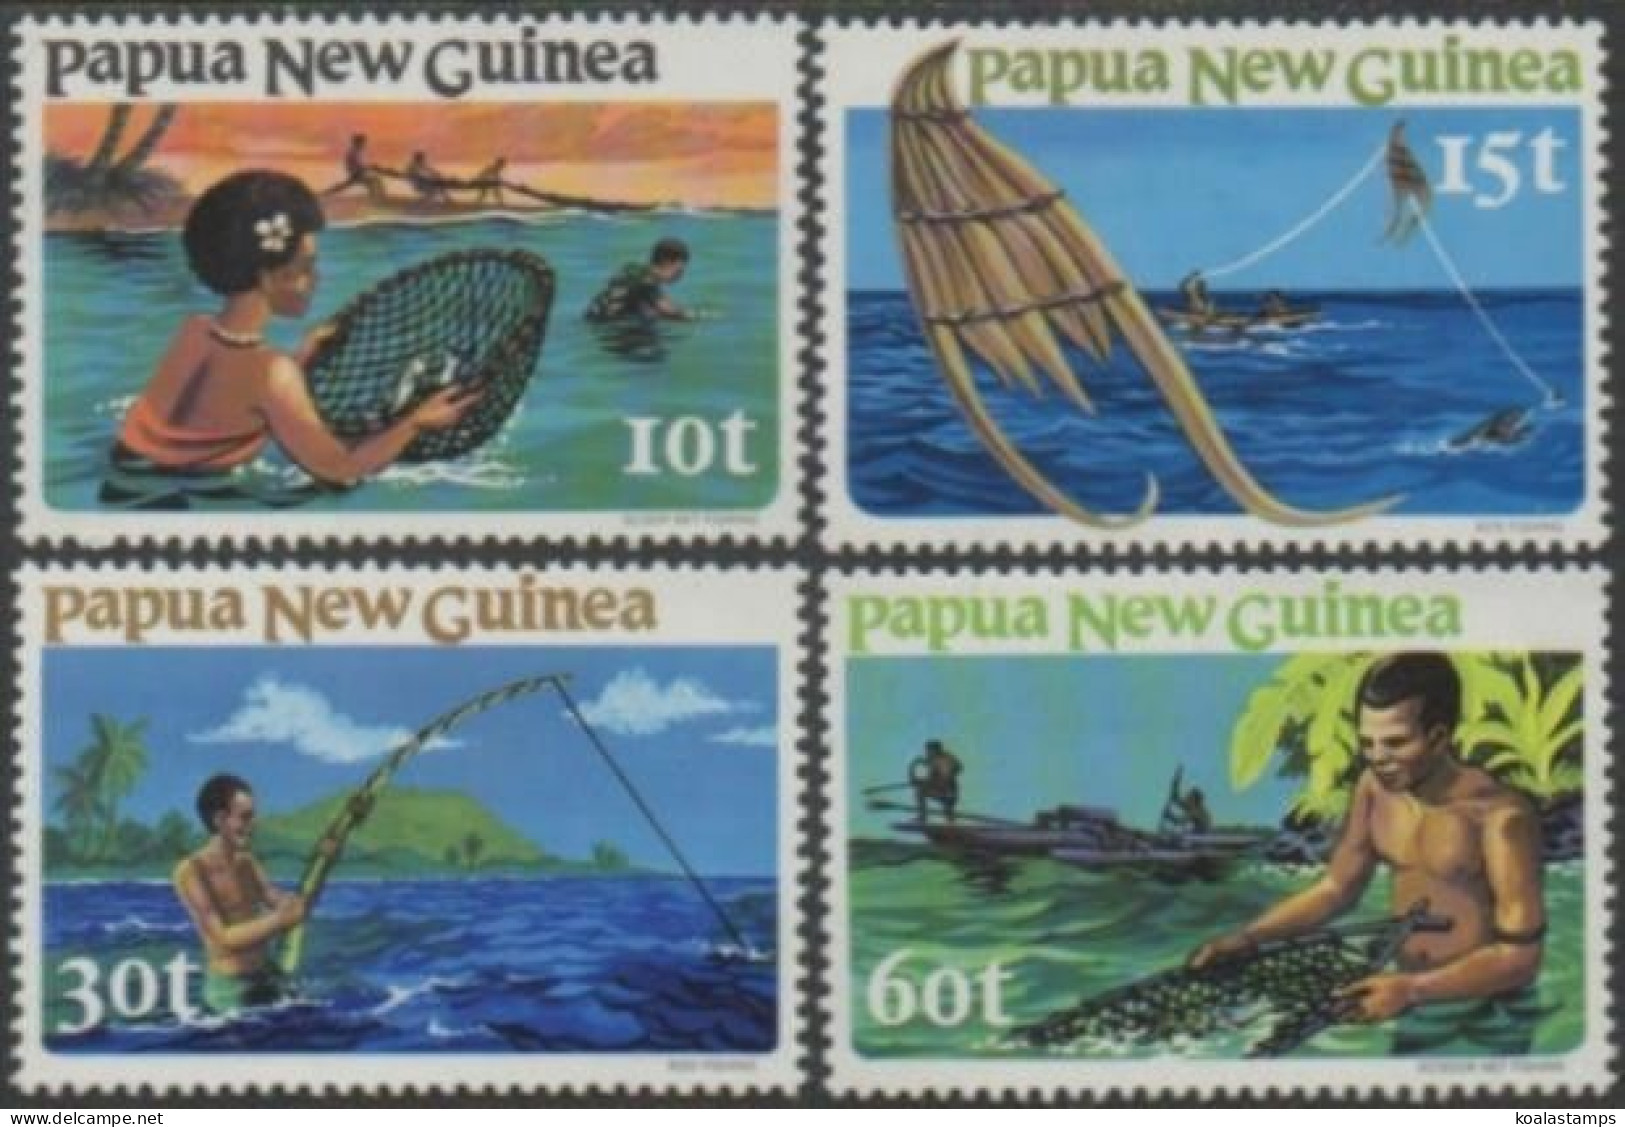 Papua New Guinea 1981 SG417-420 Traditional Fishing Set MNH - Papua New Guinea